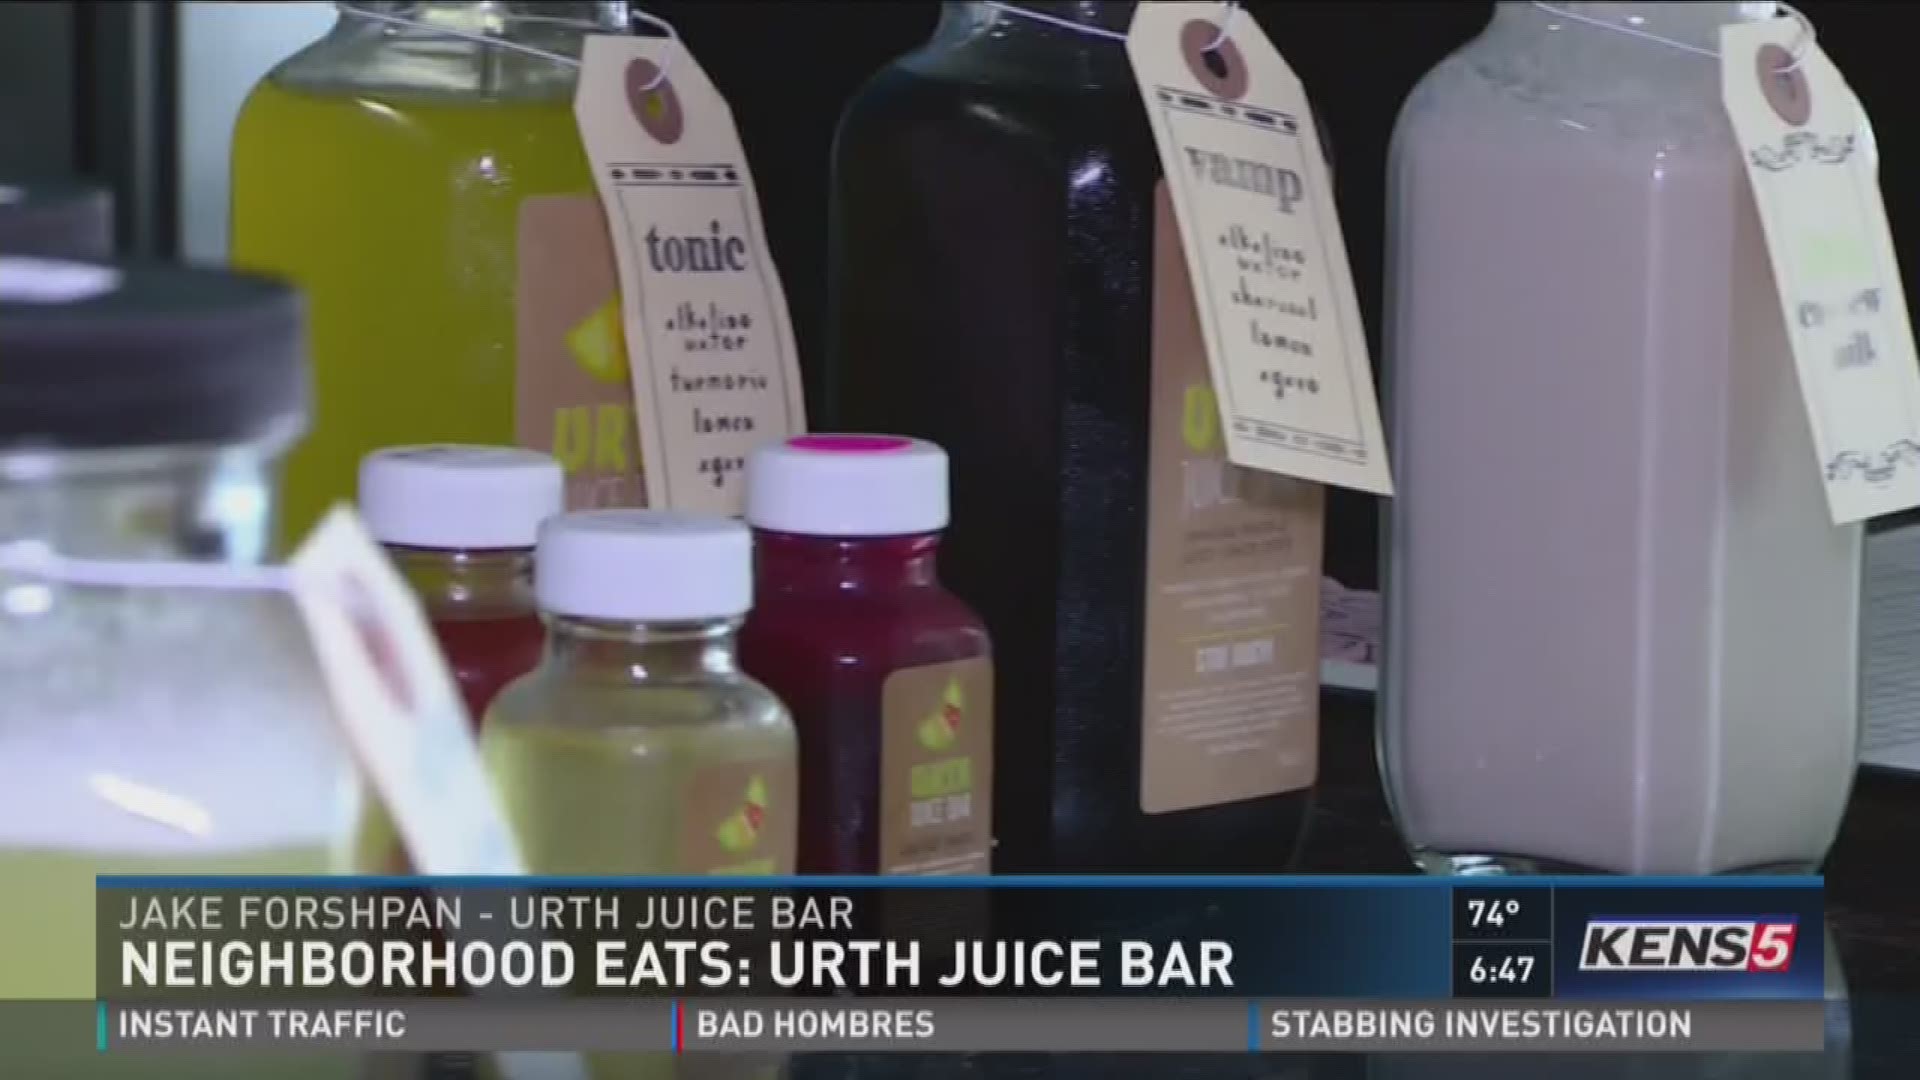 Neighborhood Eats: Urth Juice Bar